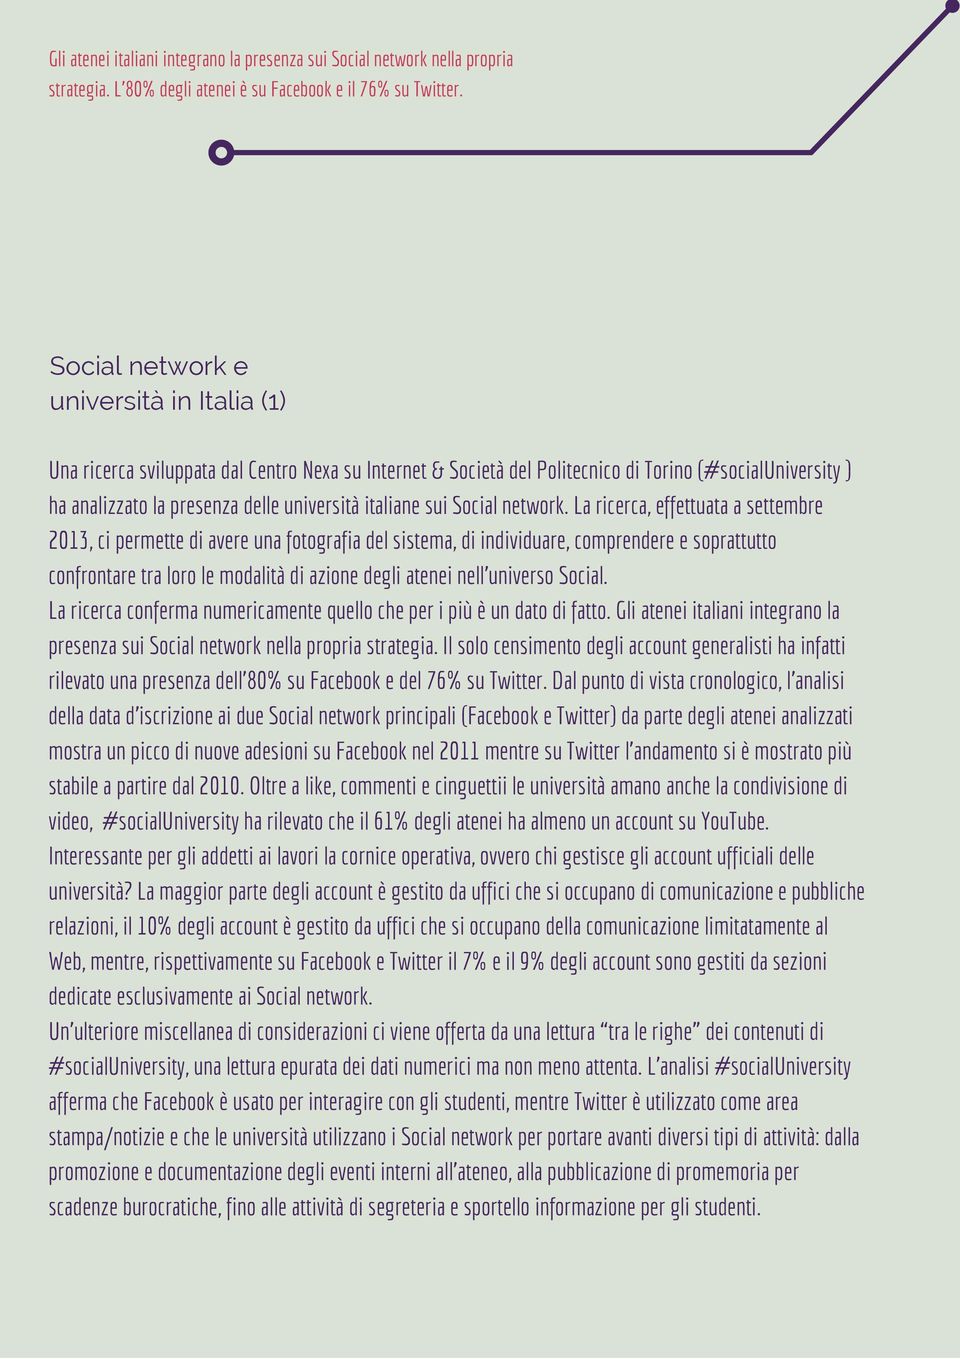 italiane sui Social network.